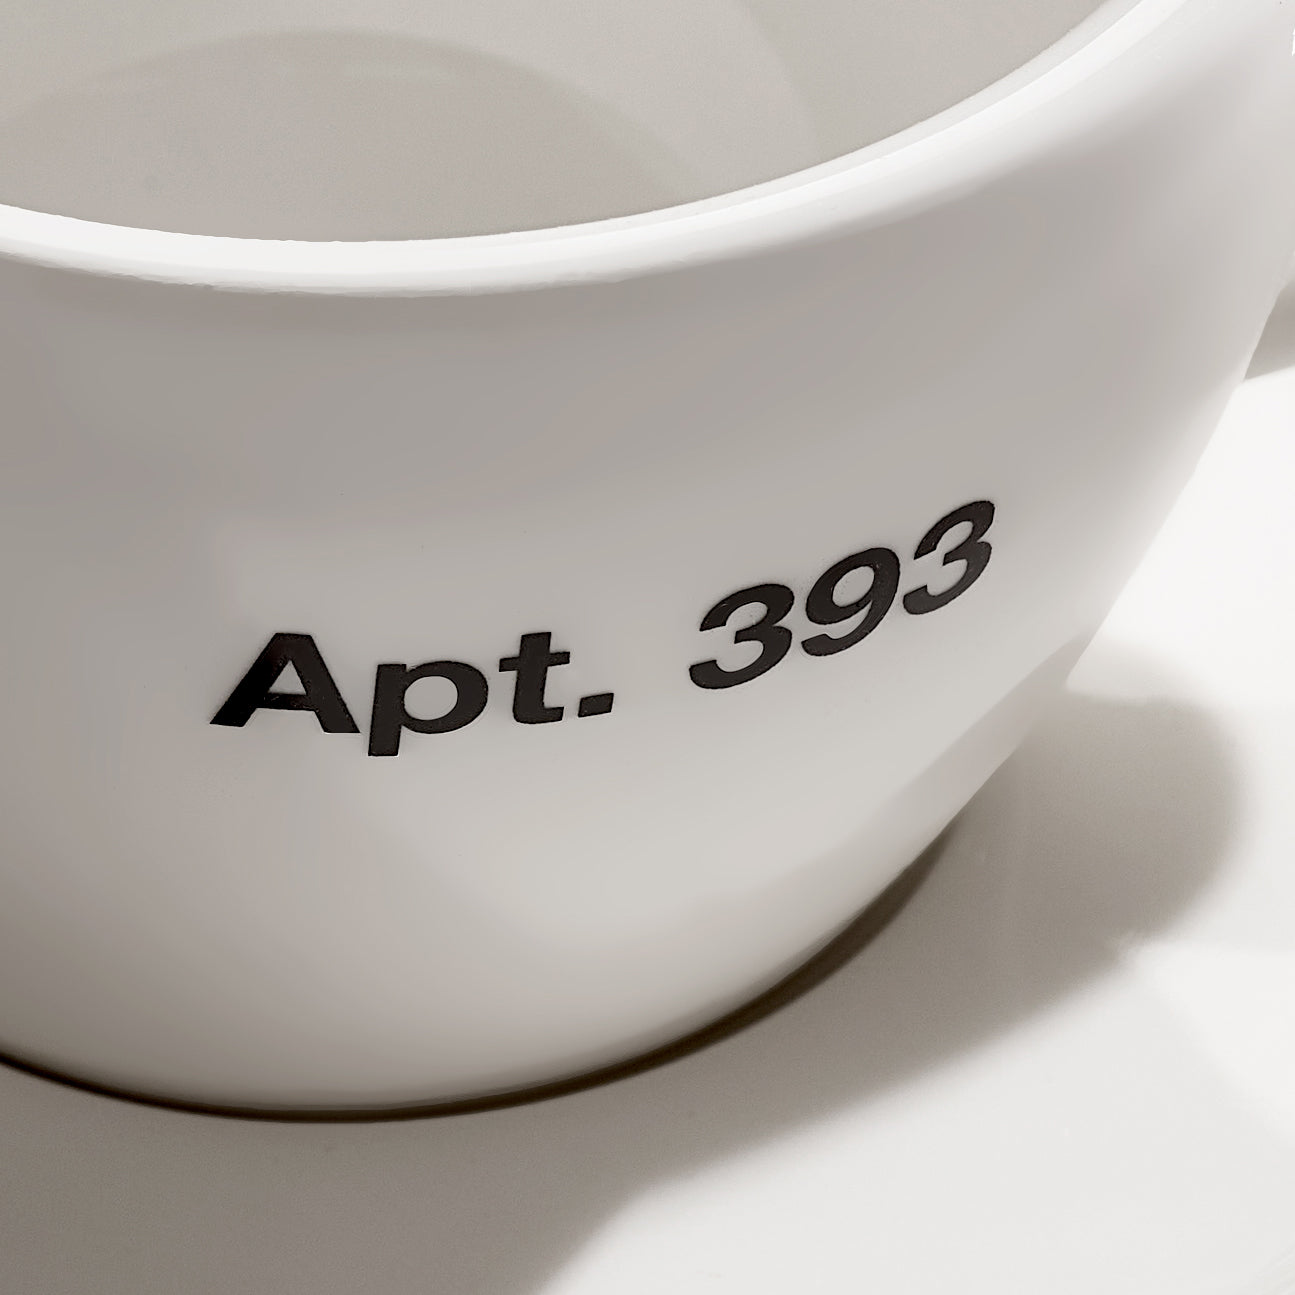 Apt. 393 Acme Espresso Cup - Trust the journey